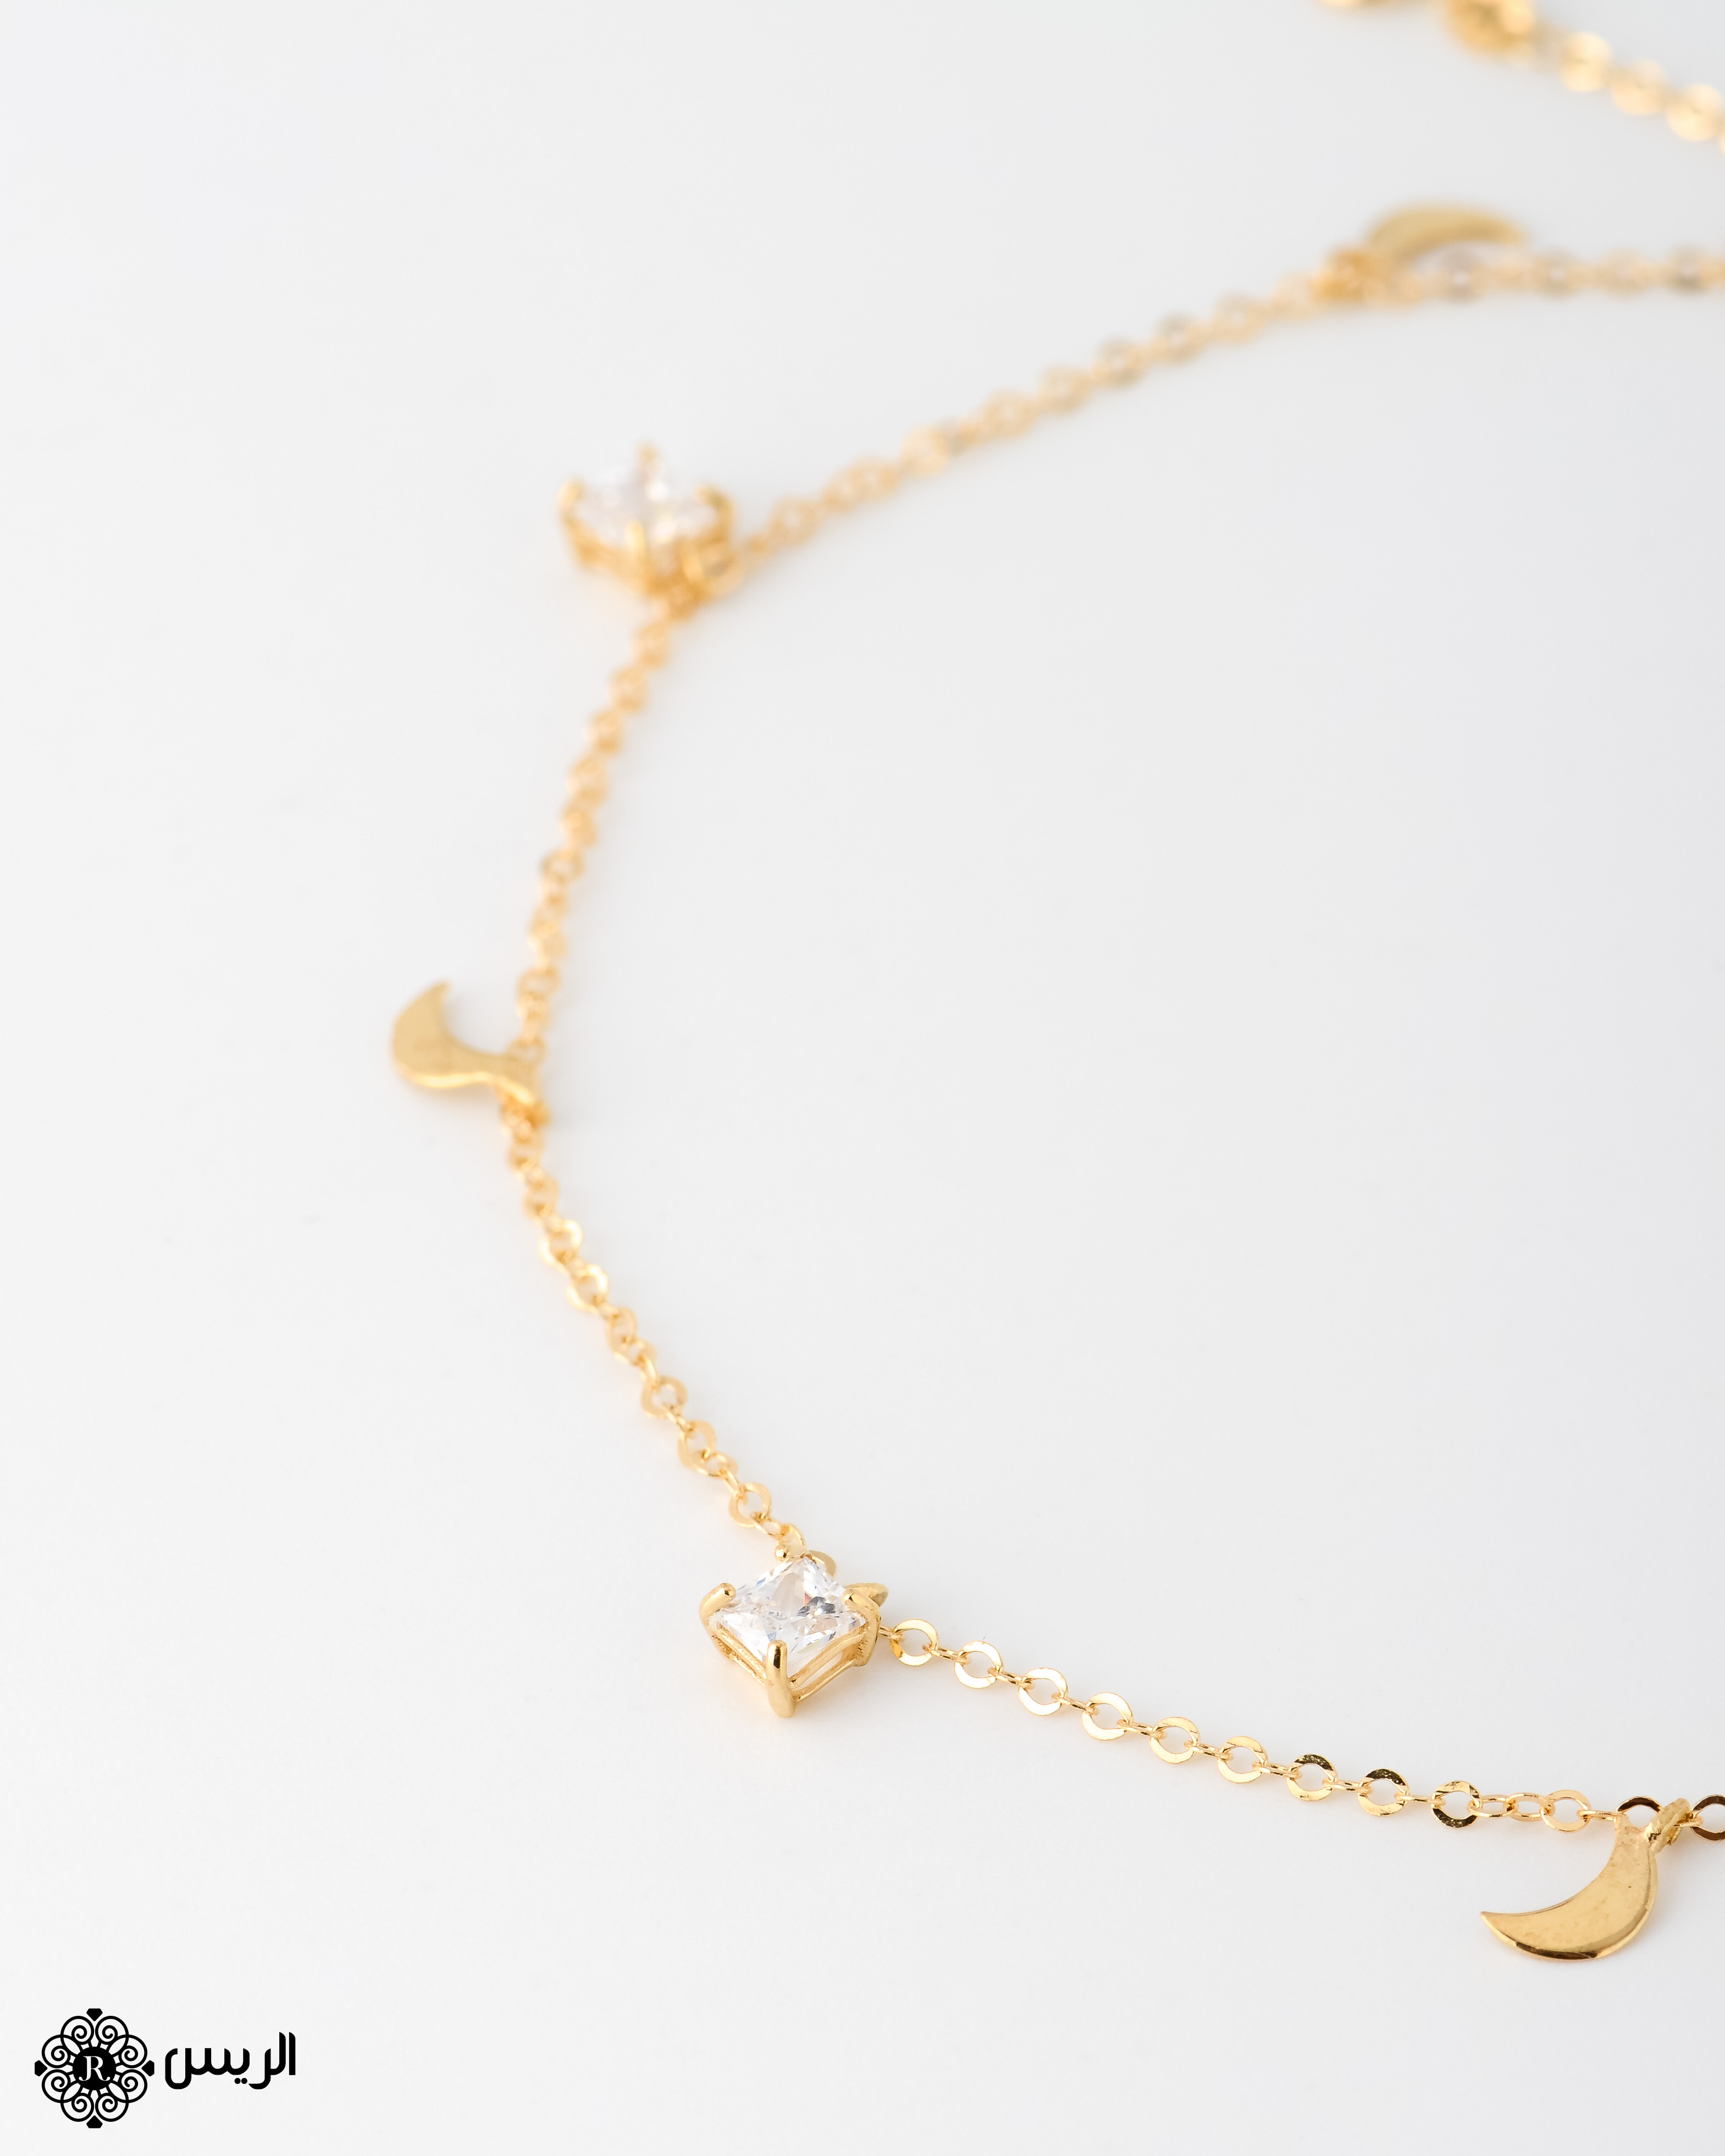 Raies jewelry Delicate Anklet with Swarovski خلخال ناعم بفصوص Swarovski الريس للمجوهرات